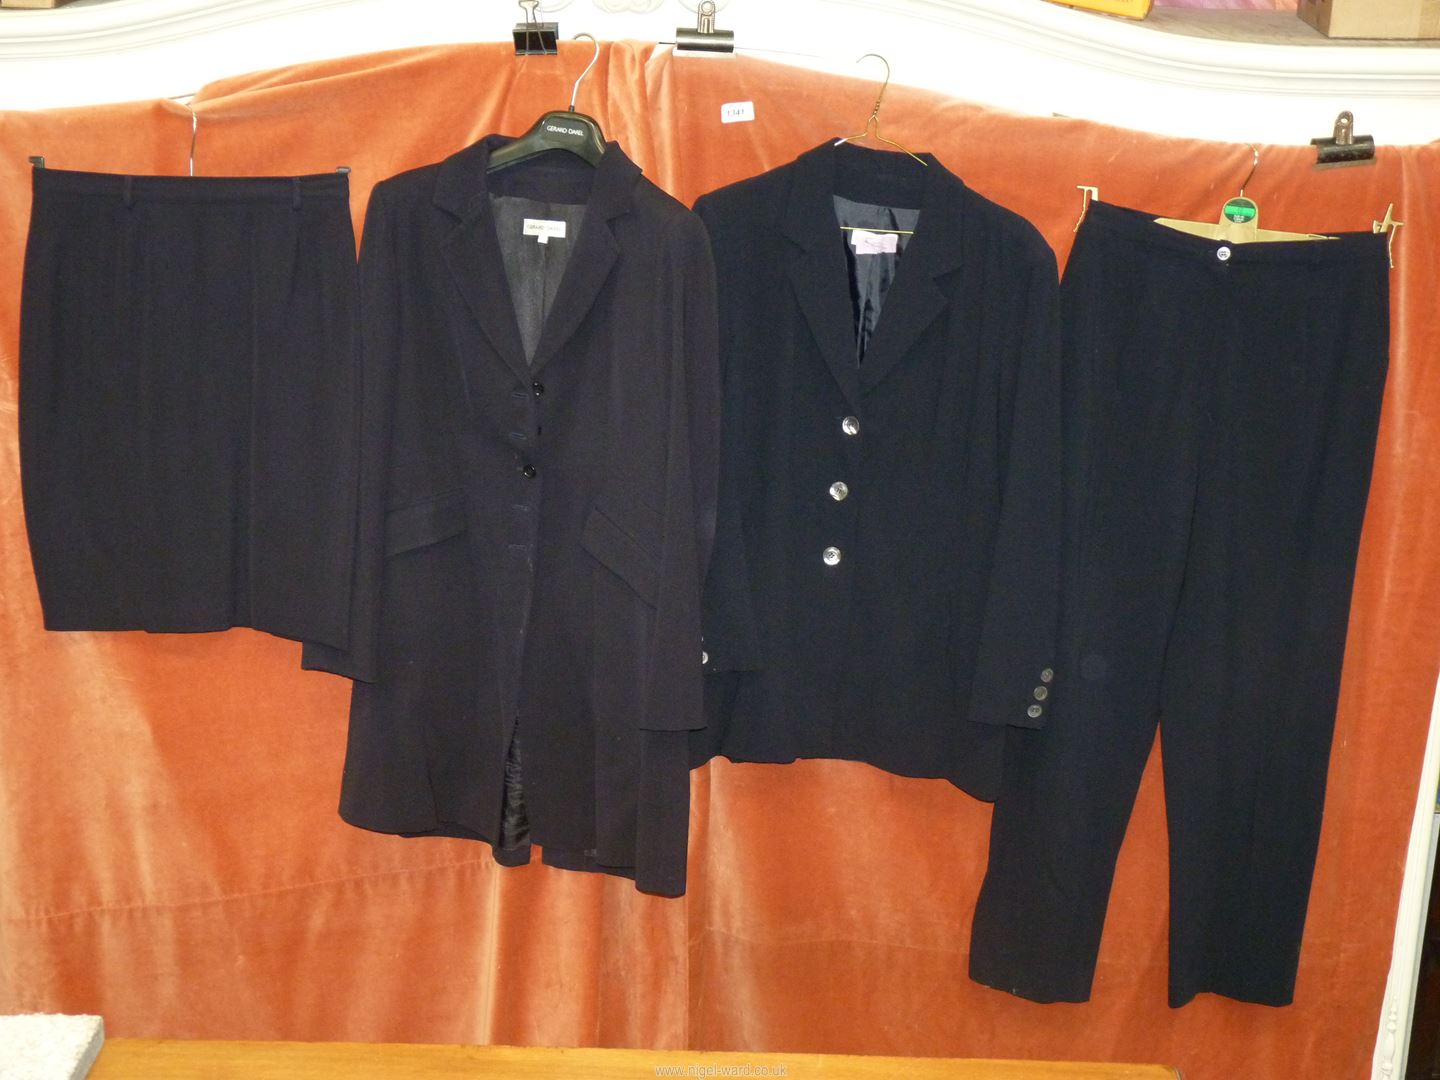 A Gerard Darel skirt suit in fine black seersucker style fabric(jacket EU size 42 and skirt EU size